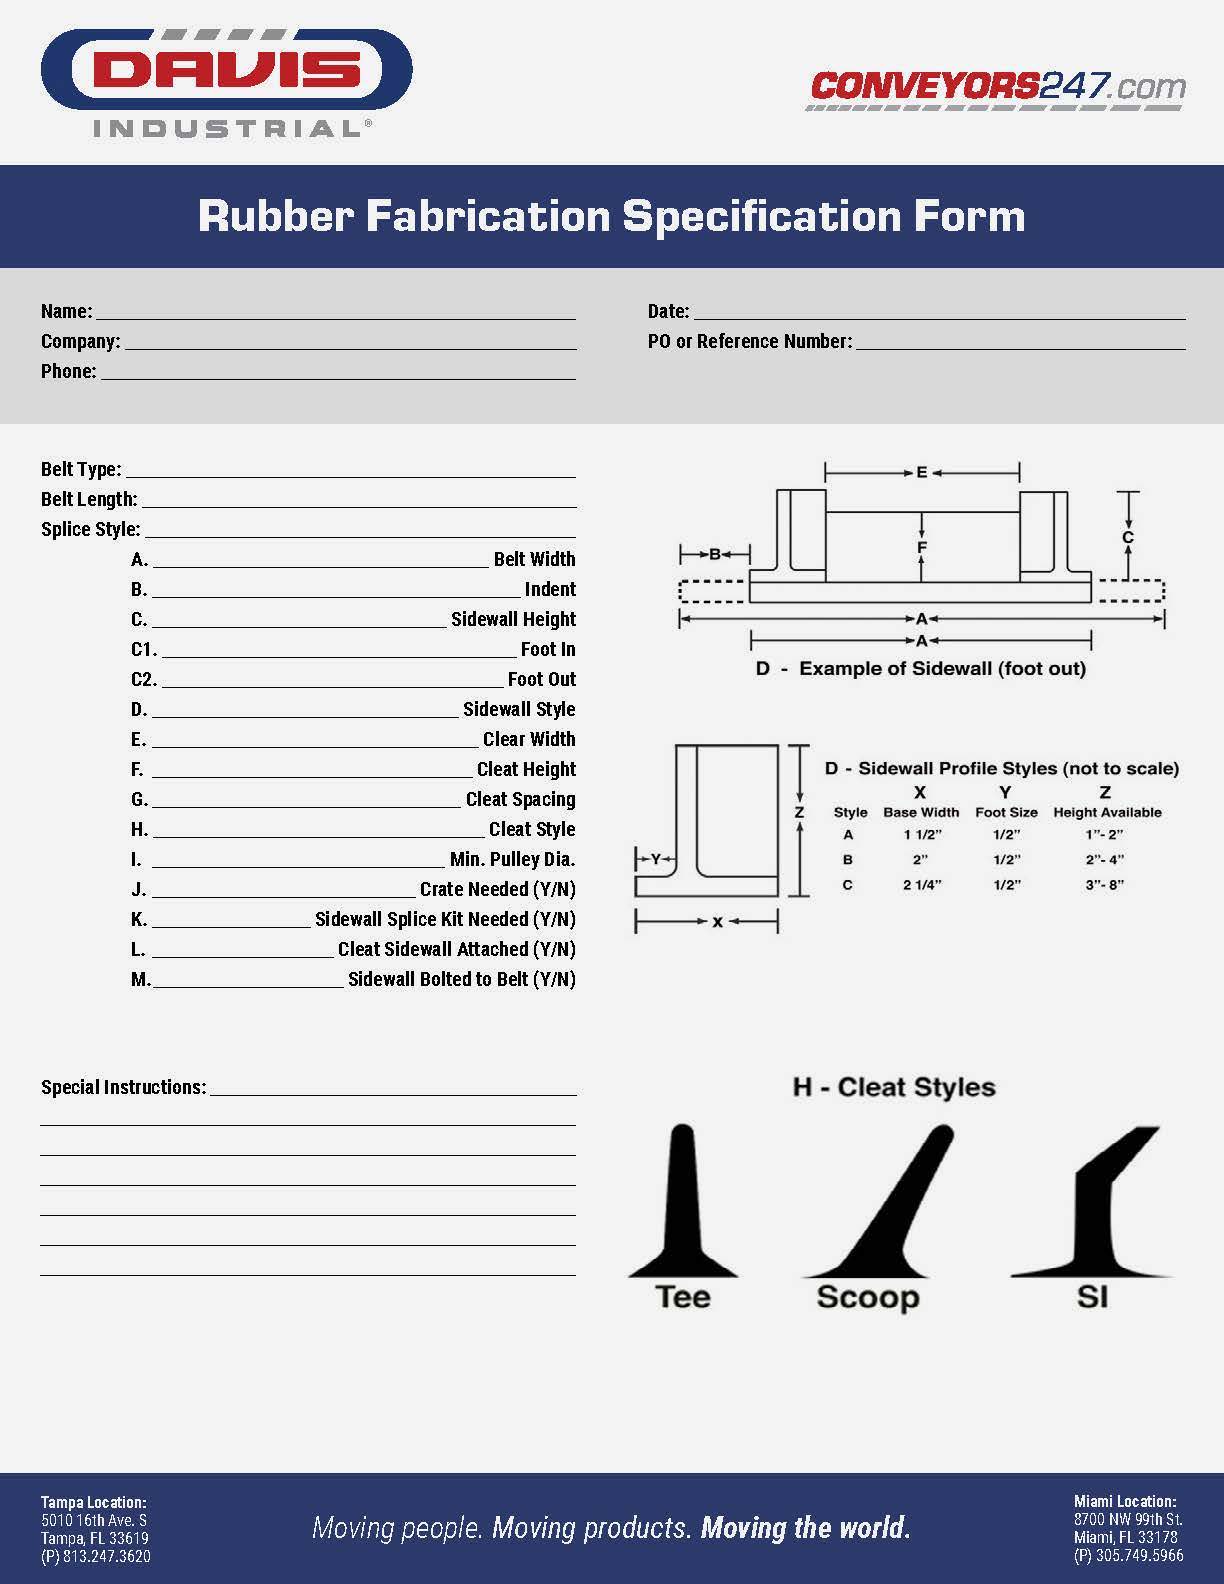 Davis_Rubber Fabrication Specification_Form